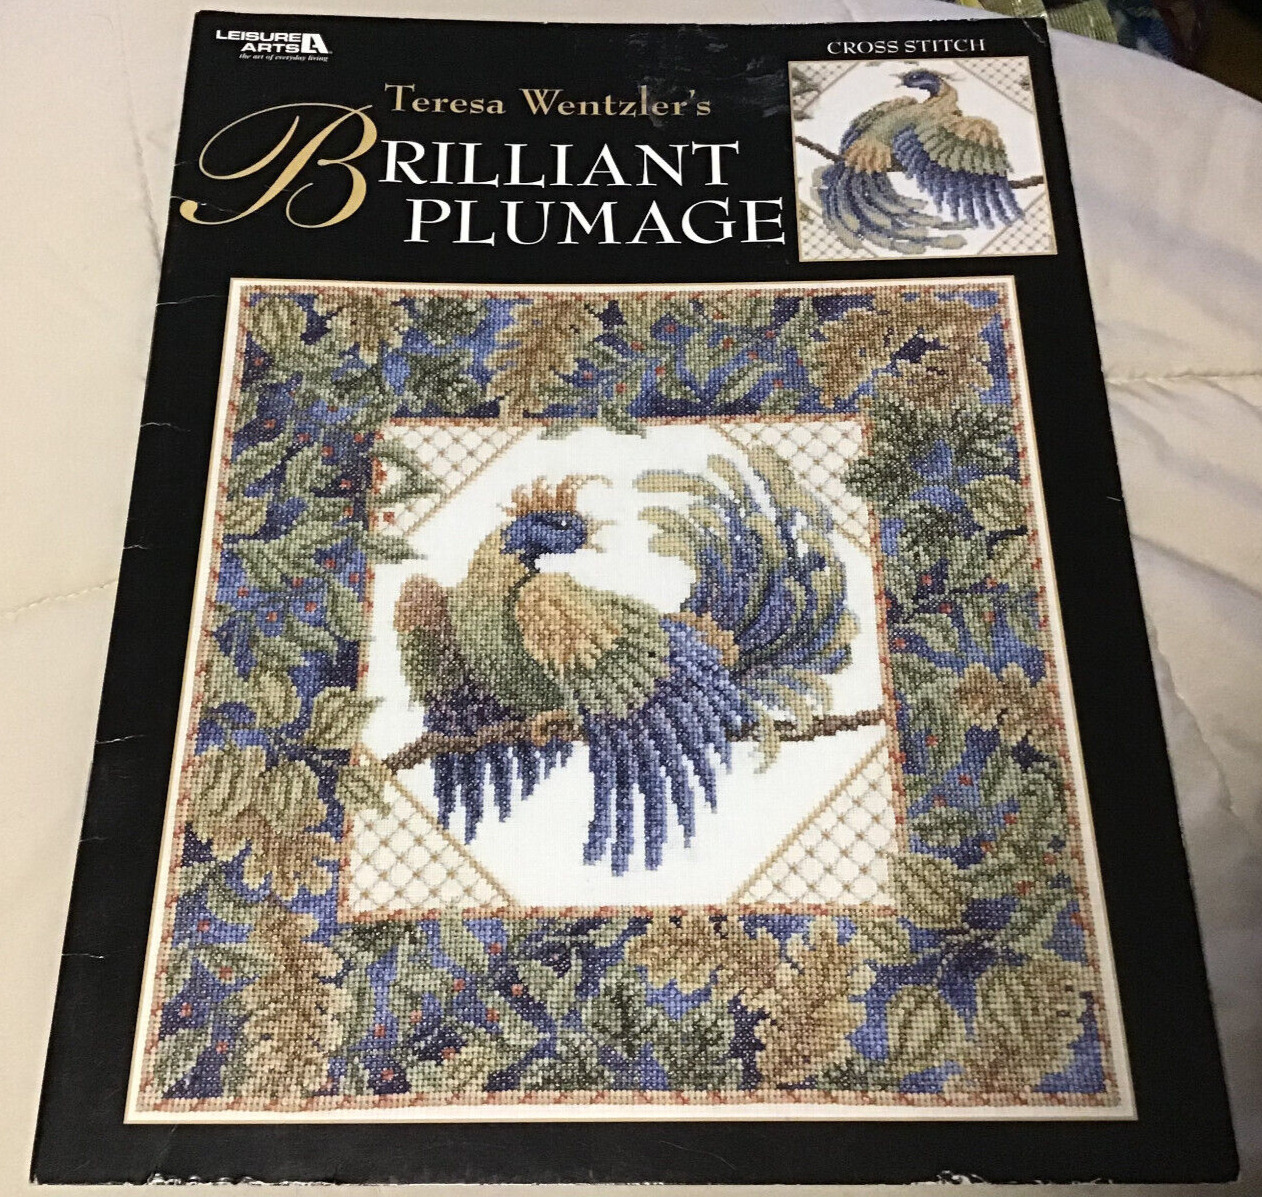 Brilliant Plumage - Teresa Wentzler Cross Stitch Charts - 2 Birds Designs